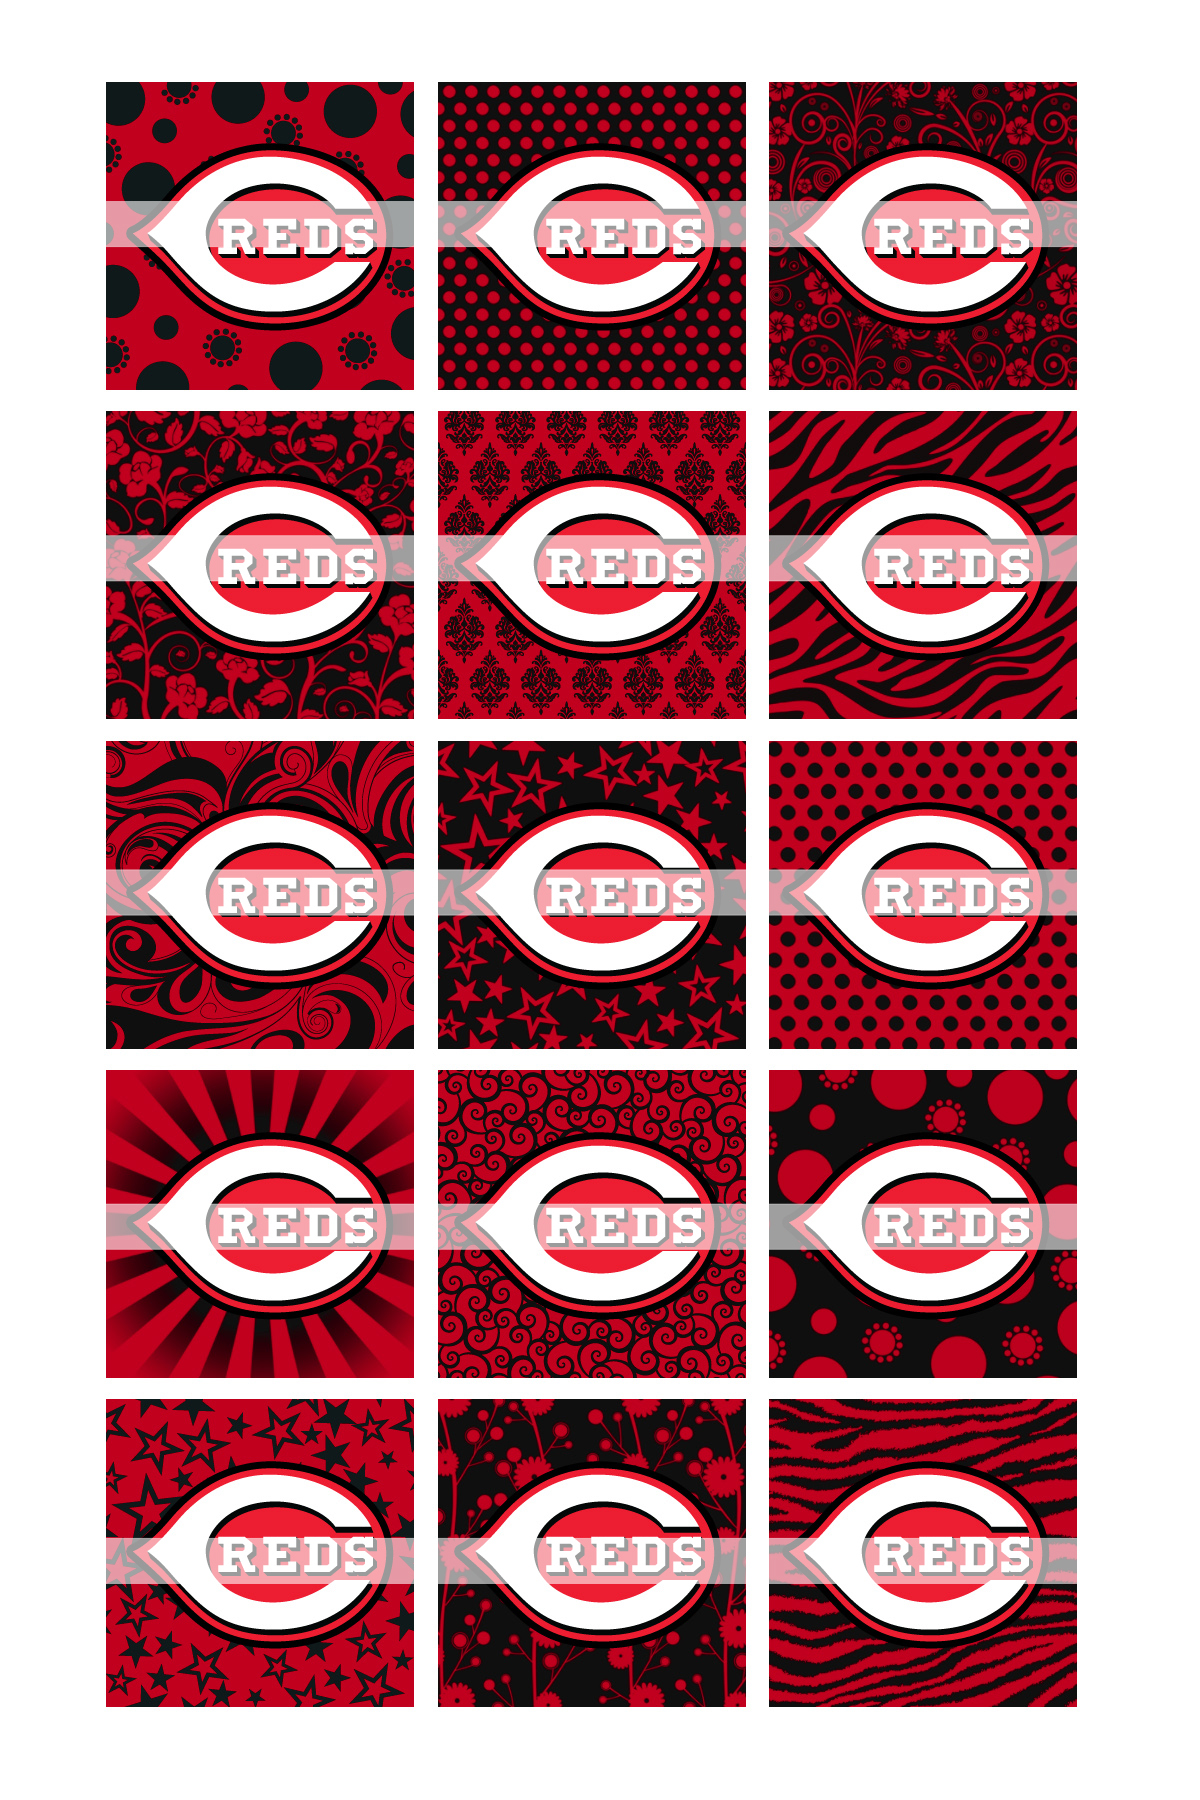 Cincinnati Reds 1 Inch Square Graphics   Item No010   1200x1800